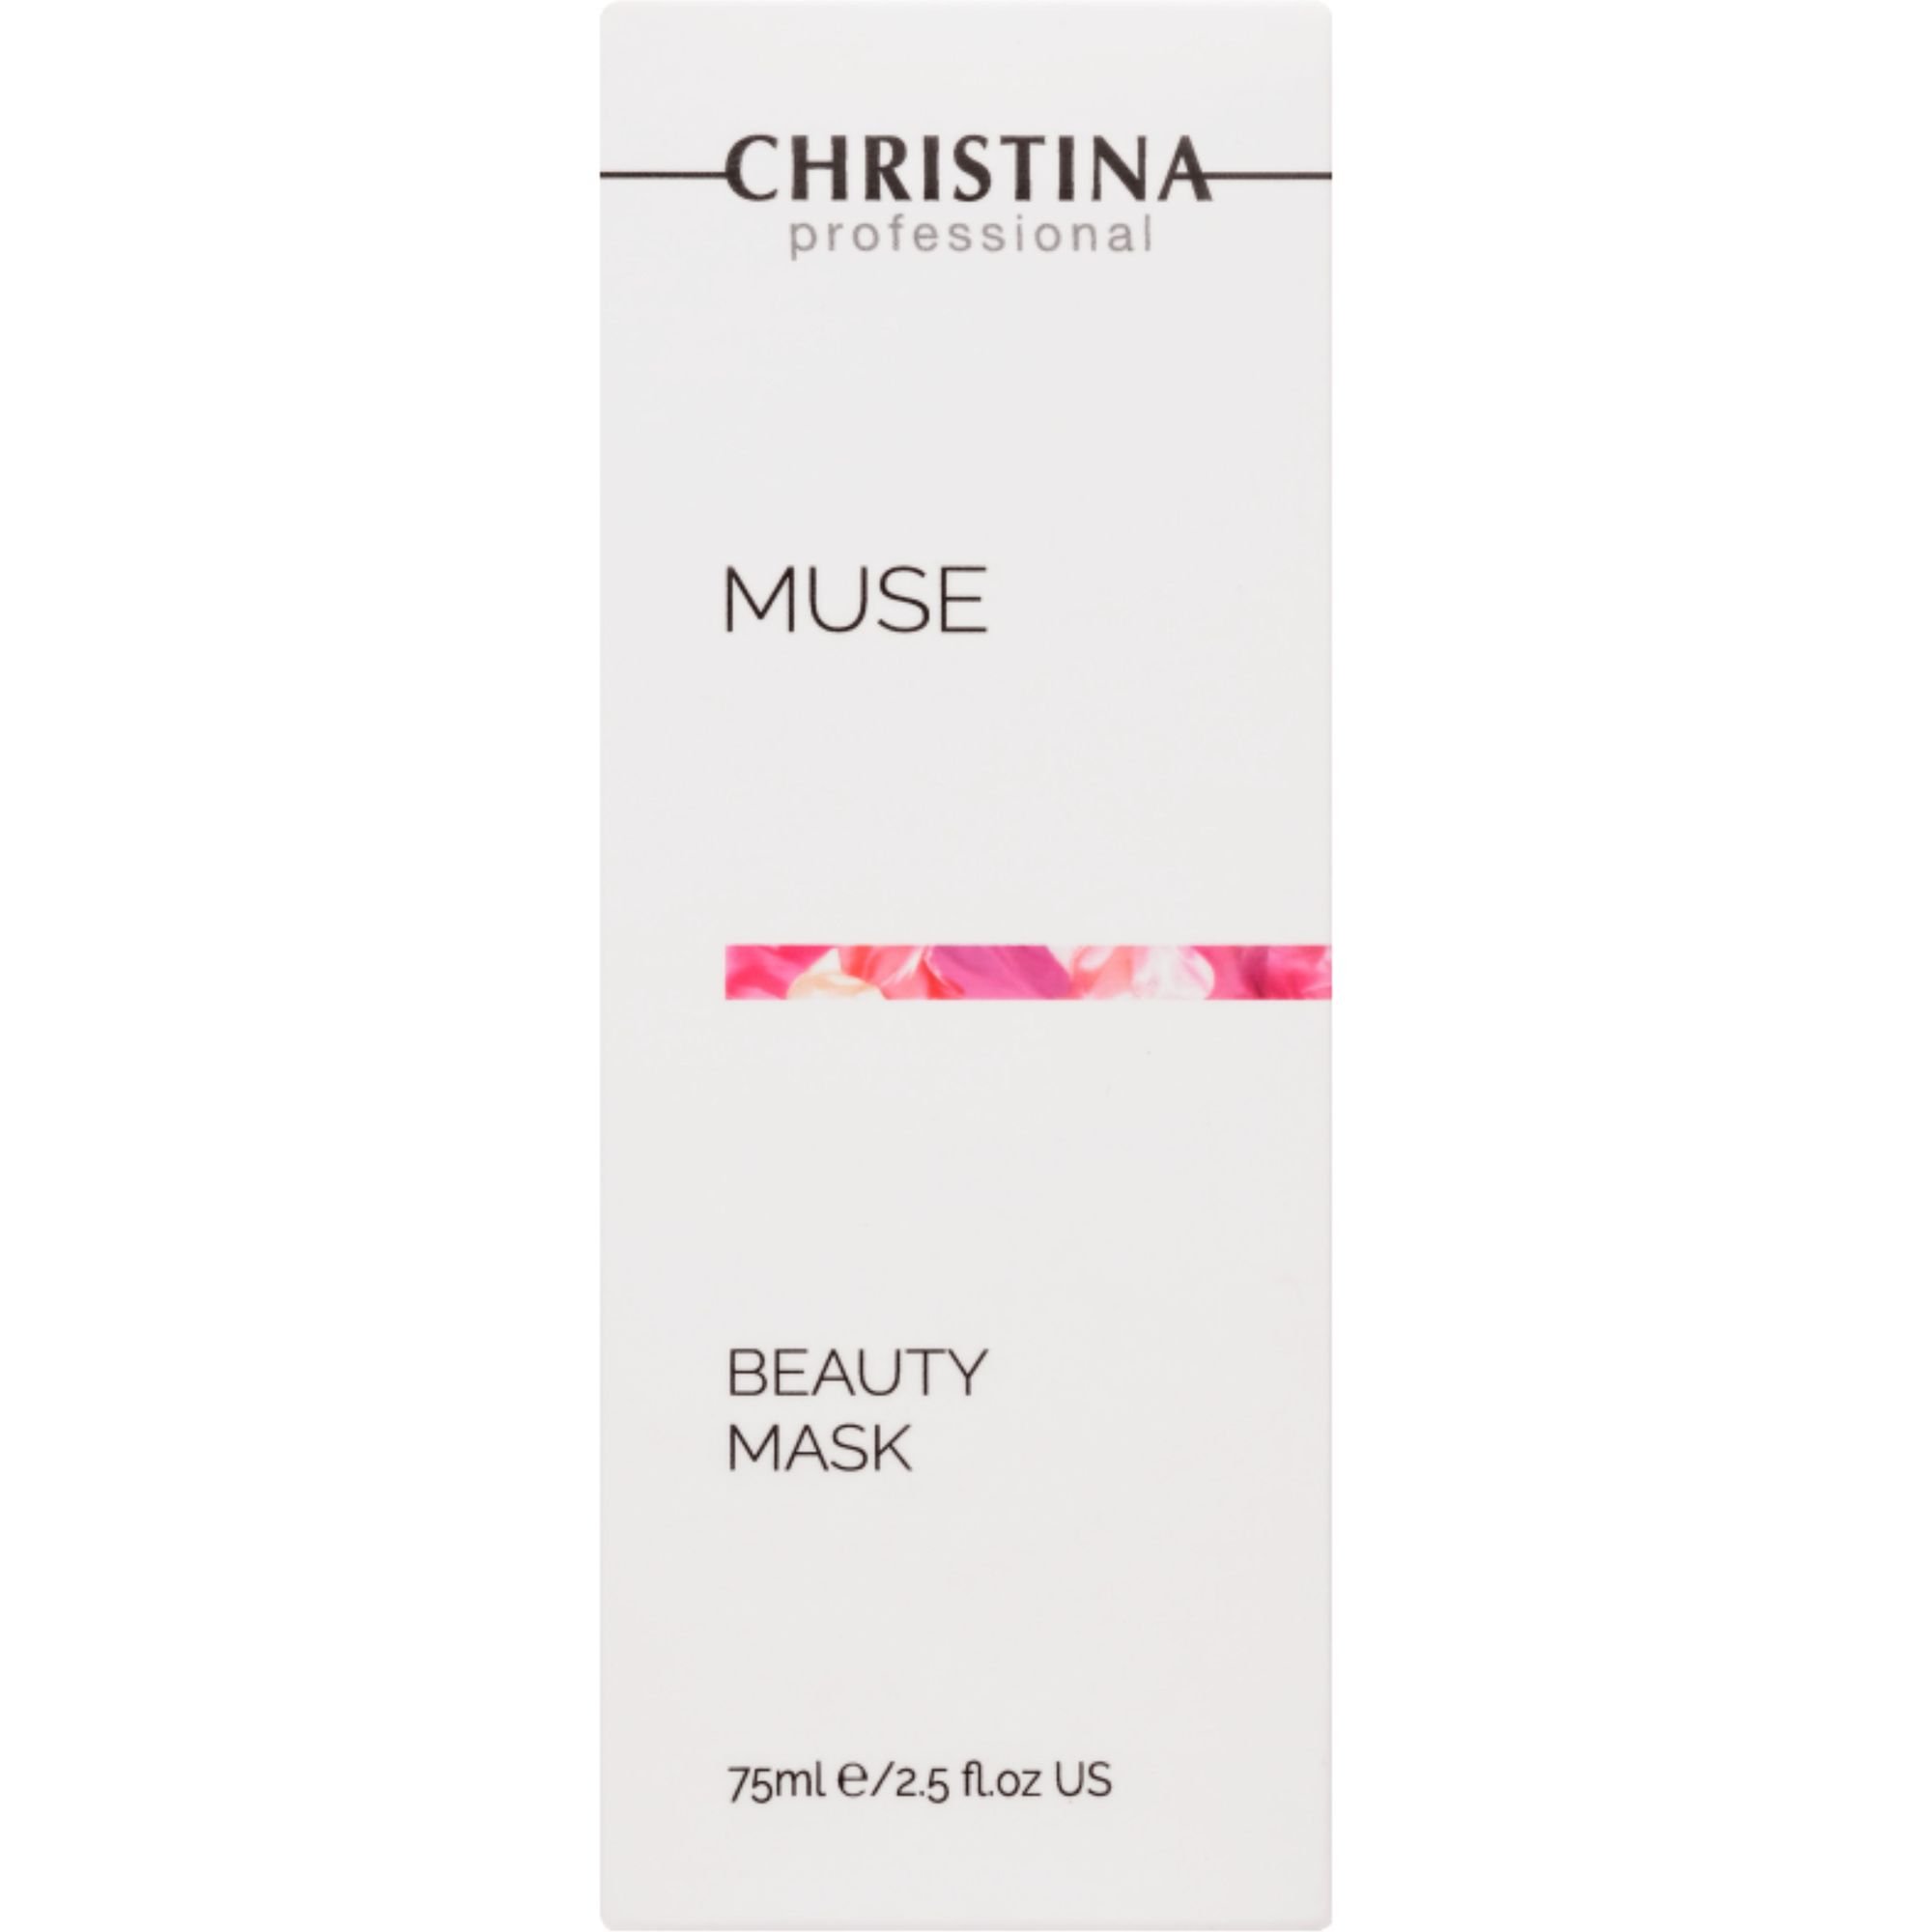 Маска краси Christina Muse Beauty Mask з екстрактом троянди 75 мл - фото 2